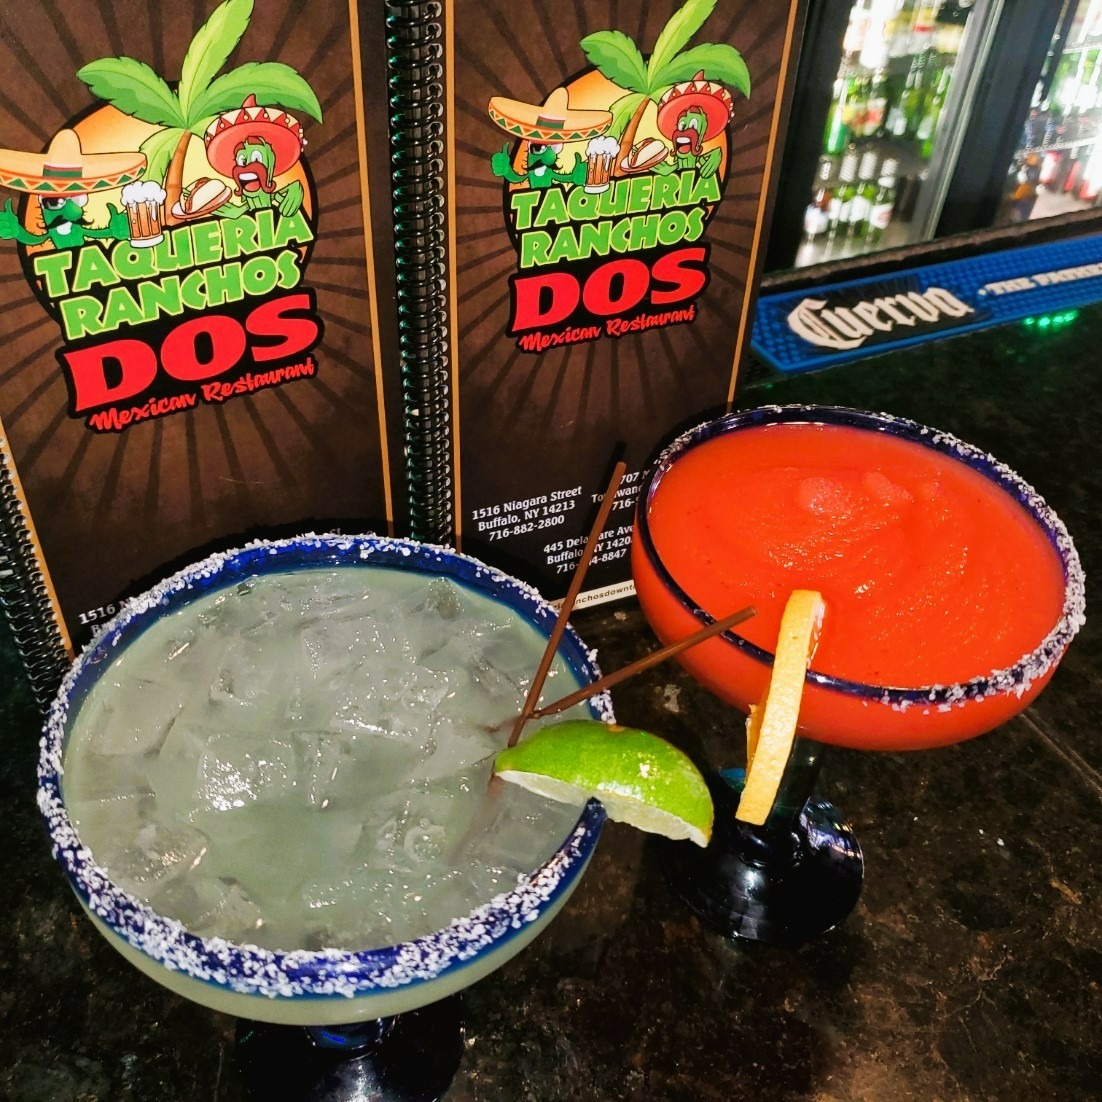 Margaritas on bar at Taqueria Ranchos Dos